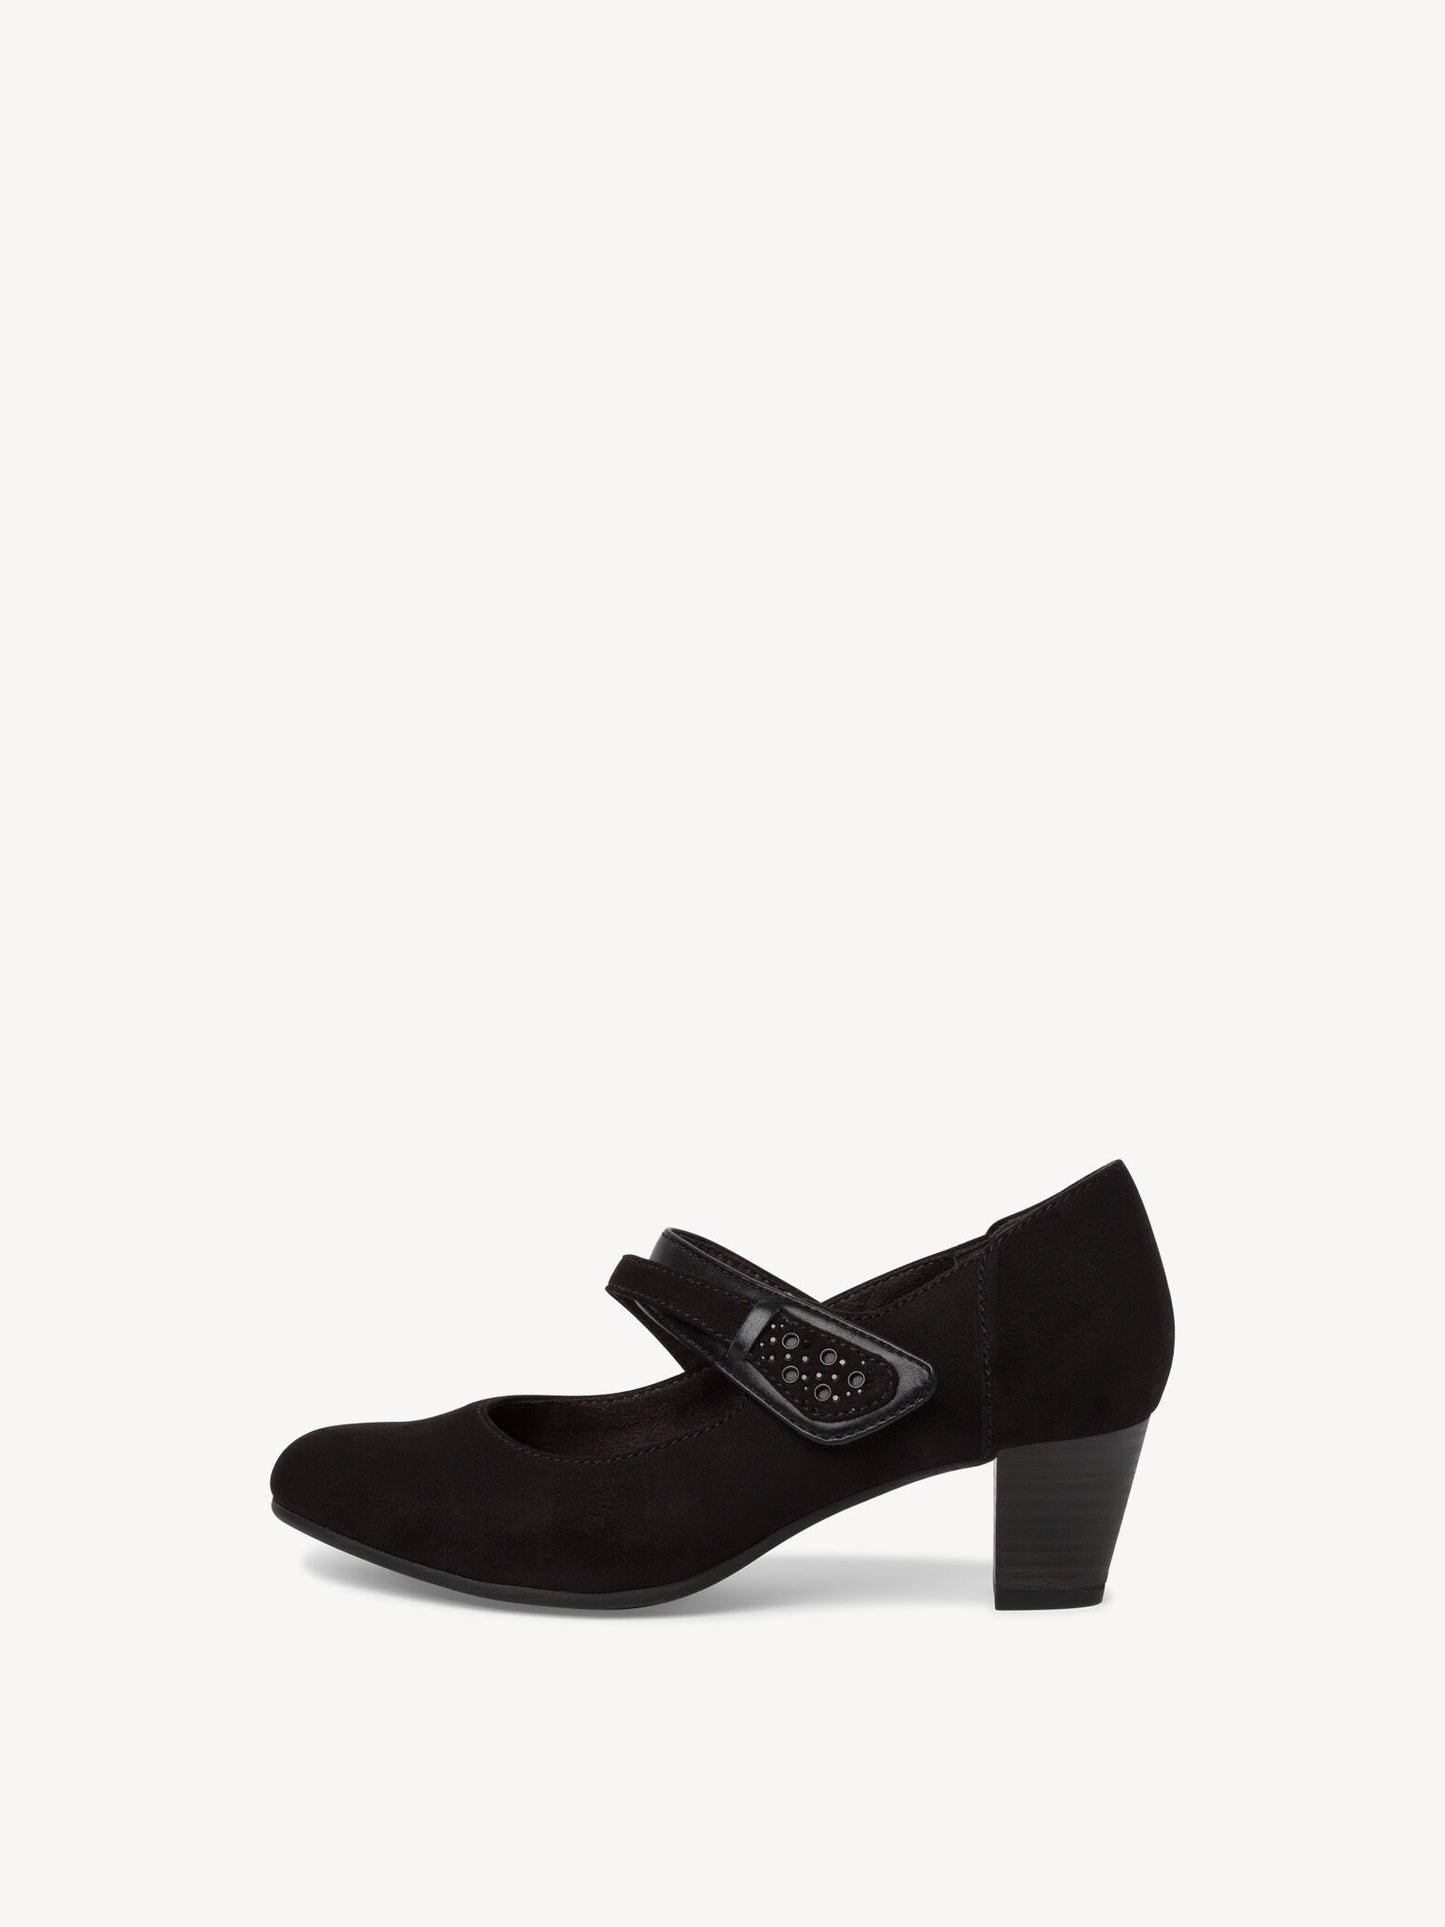 Jana Women's 8-8-24464-20 001 Softline Heel Pumps Shoes Black